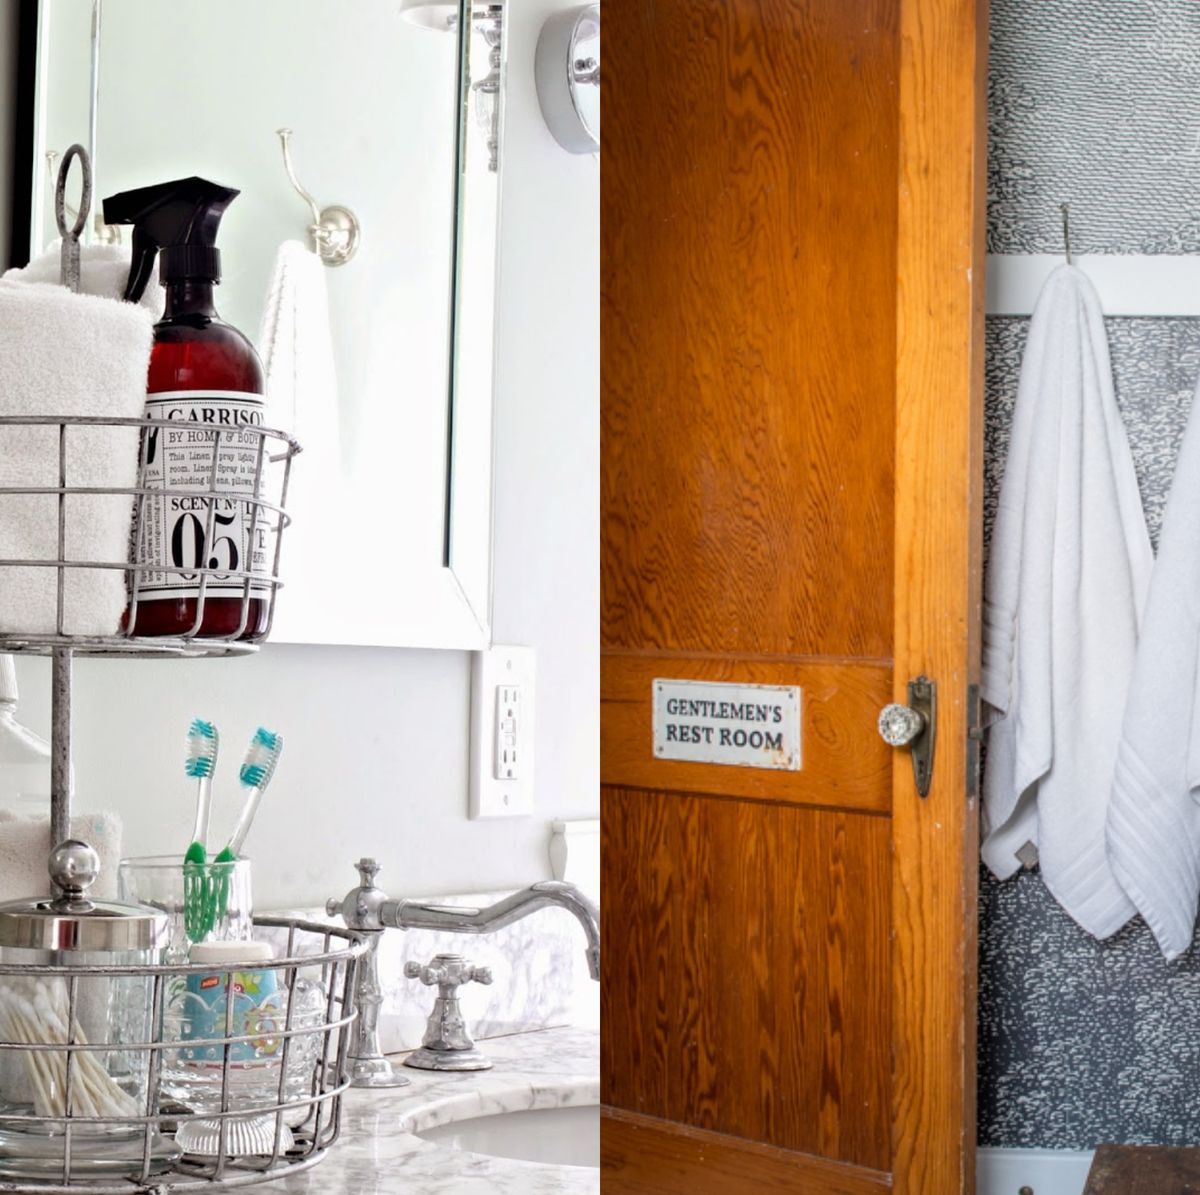 Bathroom Shelving Ideas to Keep Your Toiletries Organized